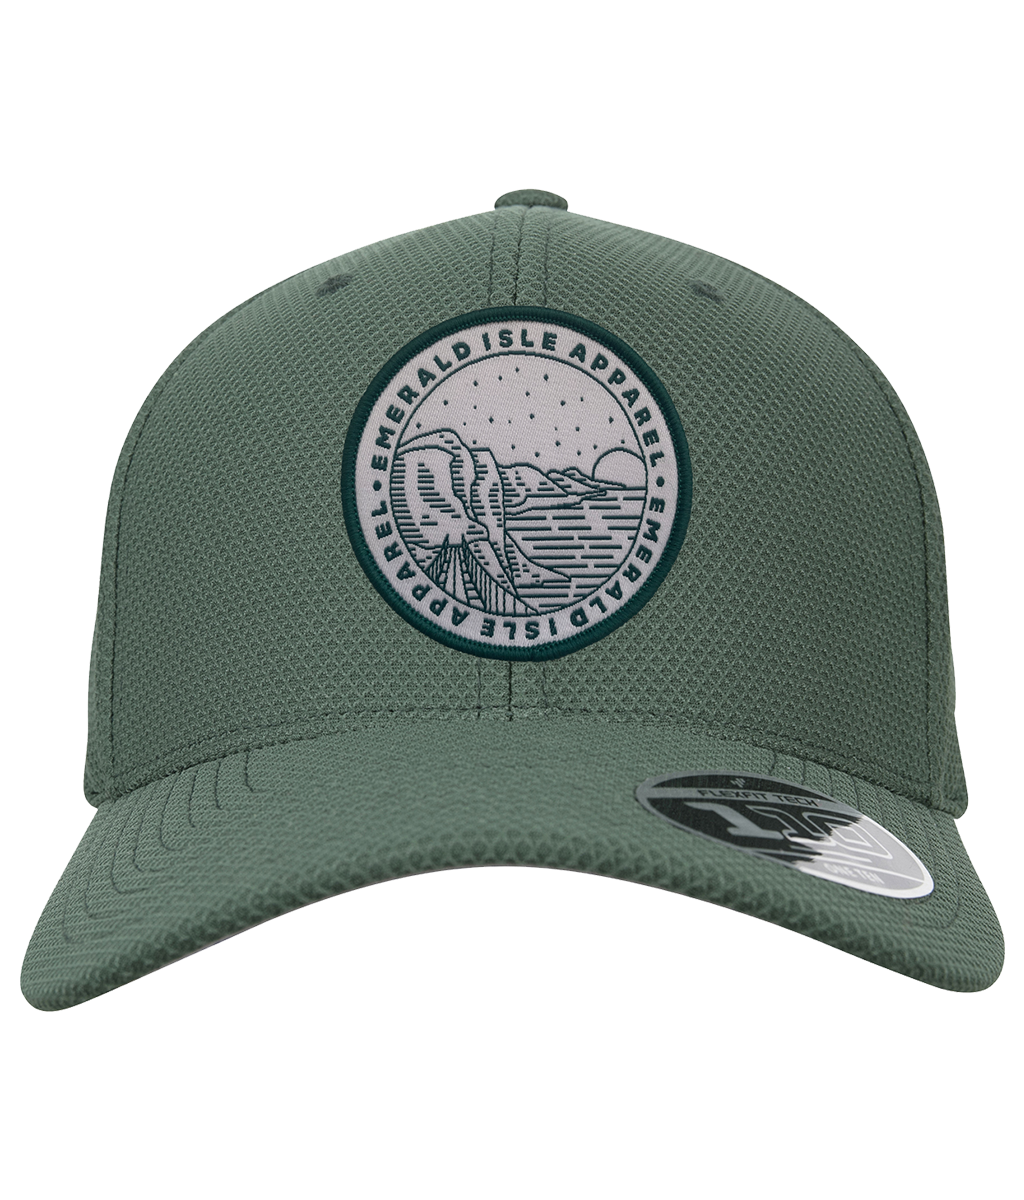 Green Emerald Isle Apparel Hybrid Cap